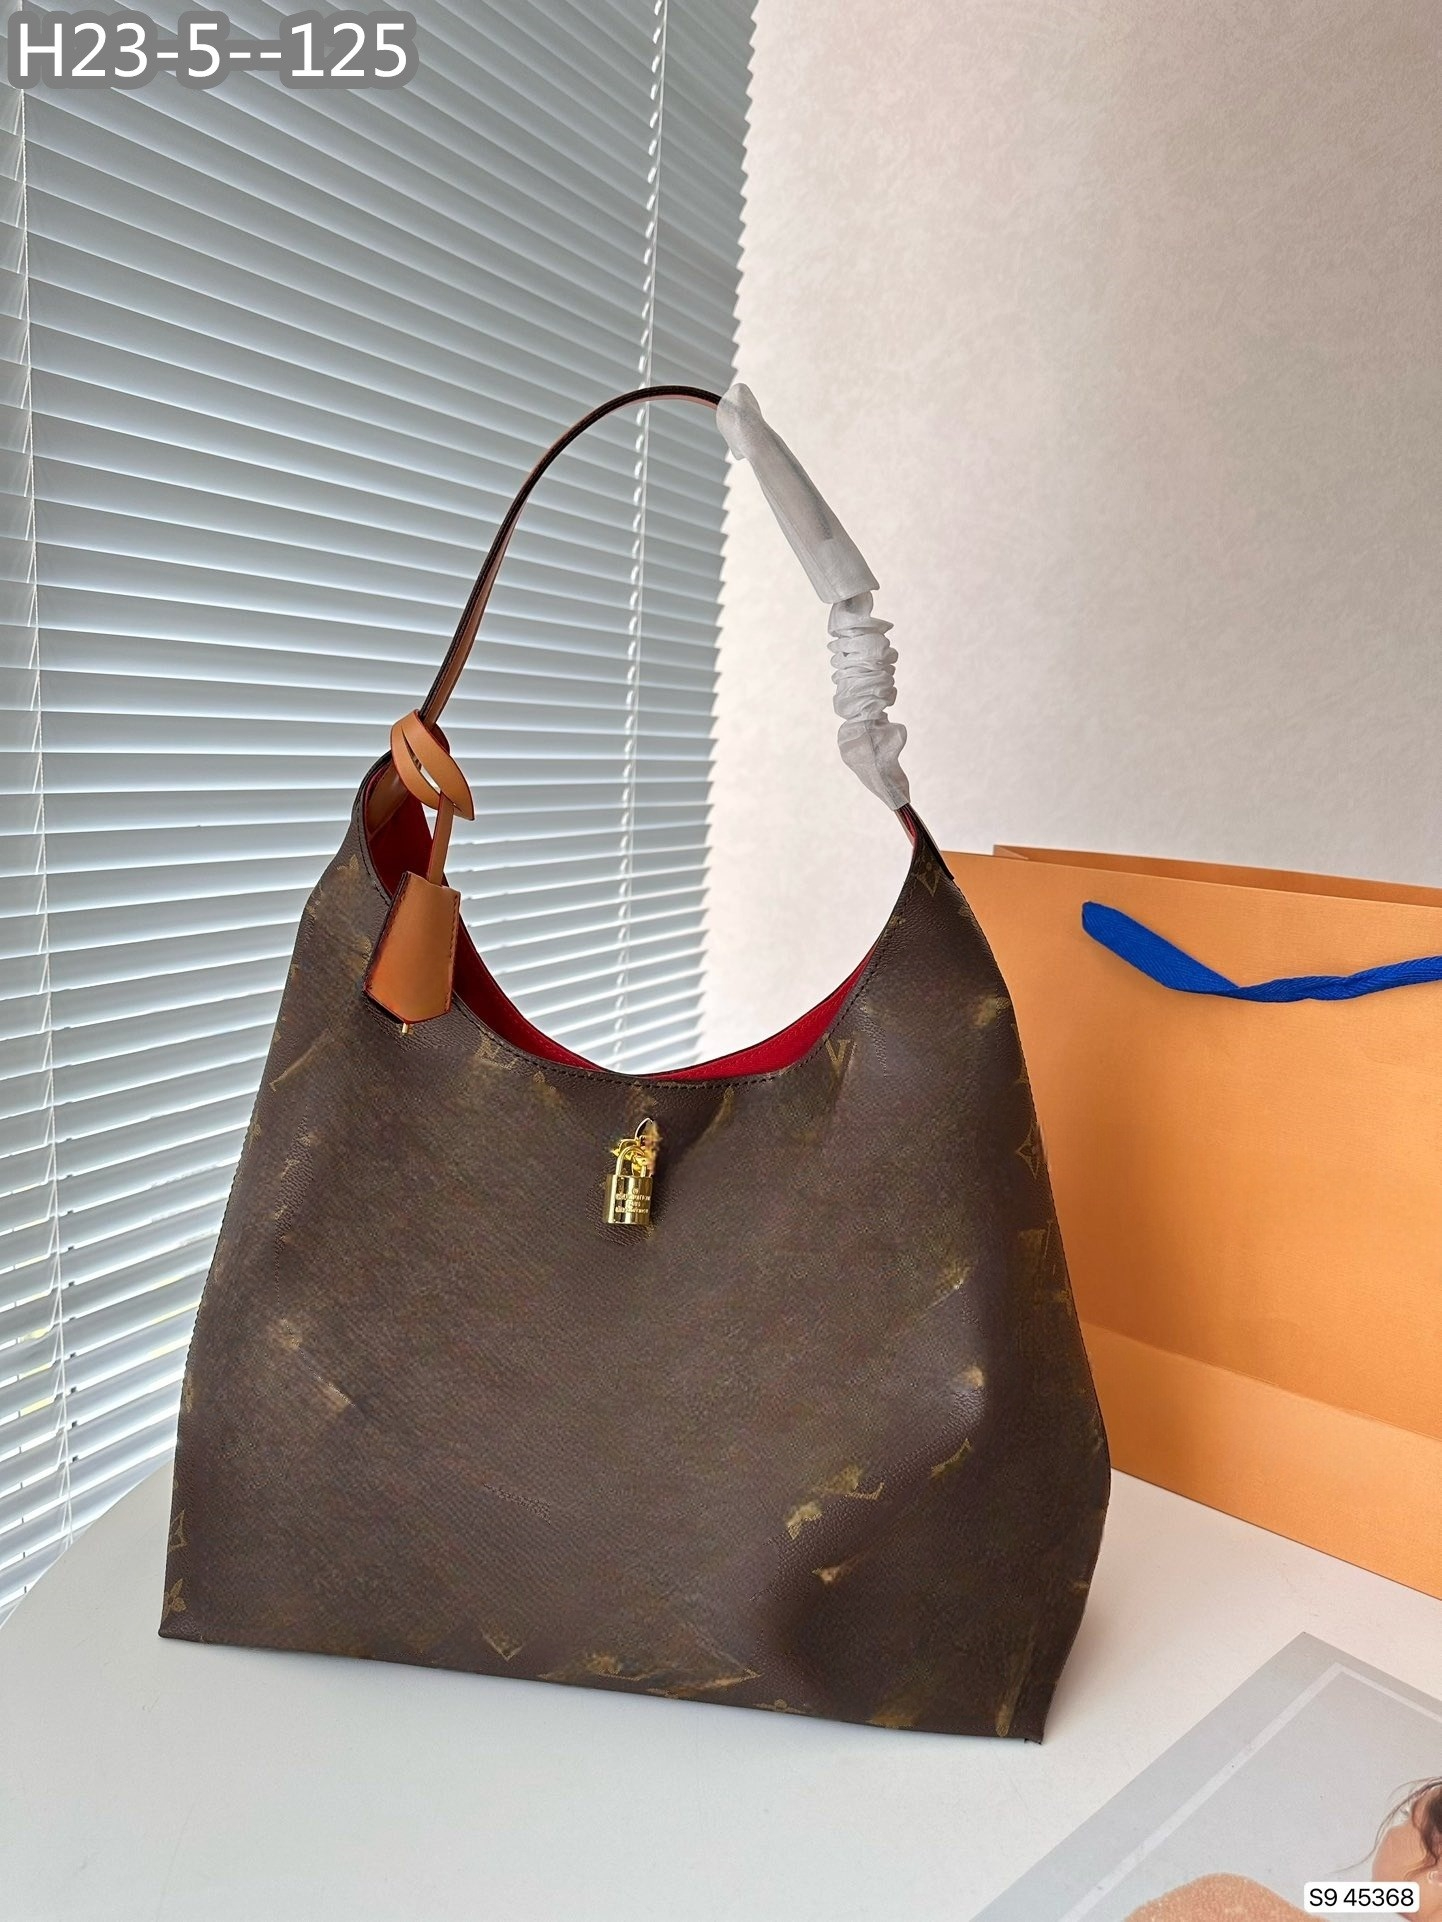 Luxury designer bag single shoulder lady fashion bag luggage tote bag nylon leather handbag messenger bag famous handbag lady top quality